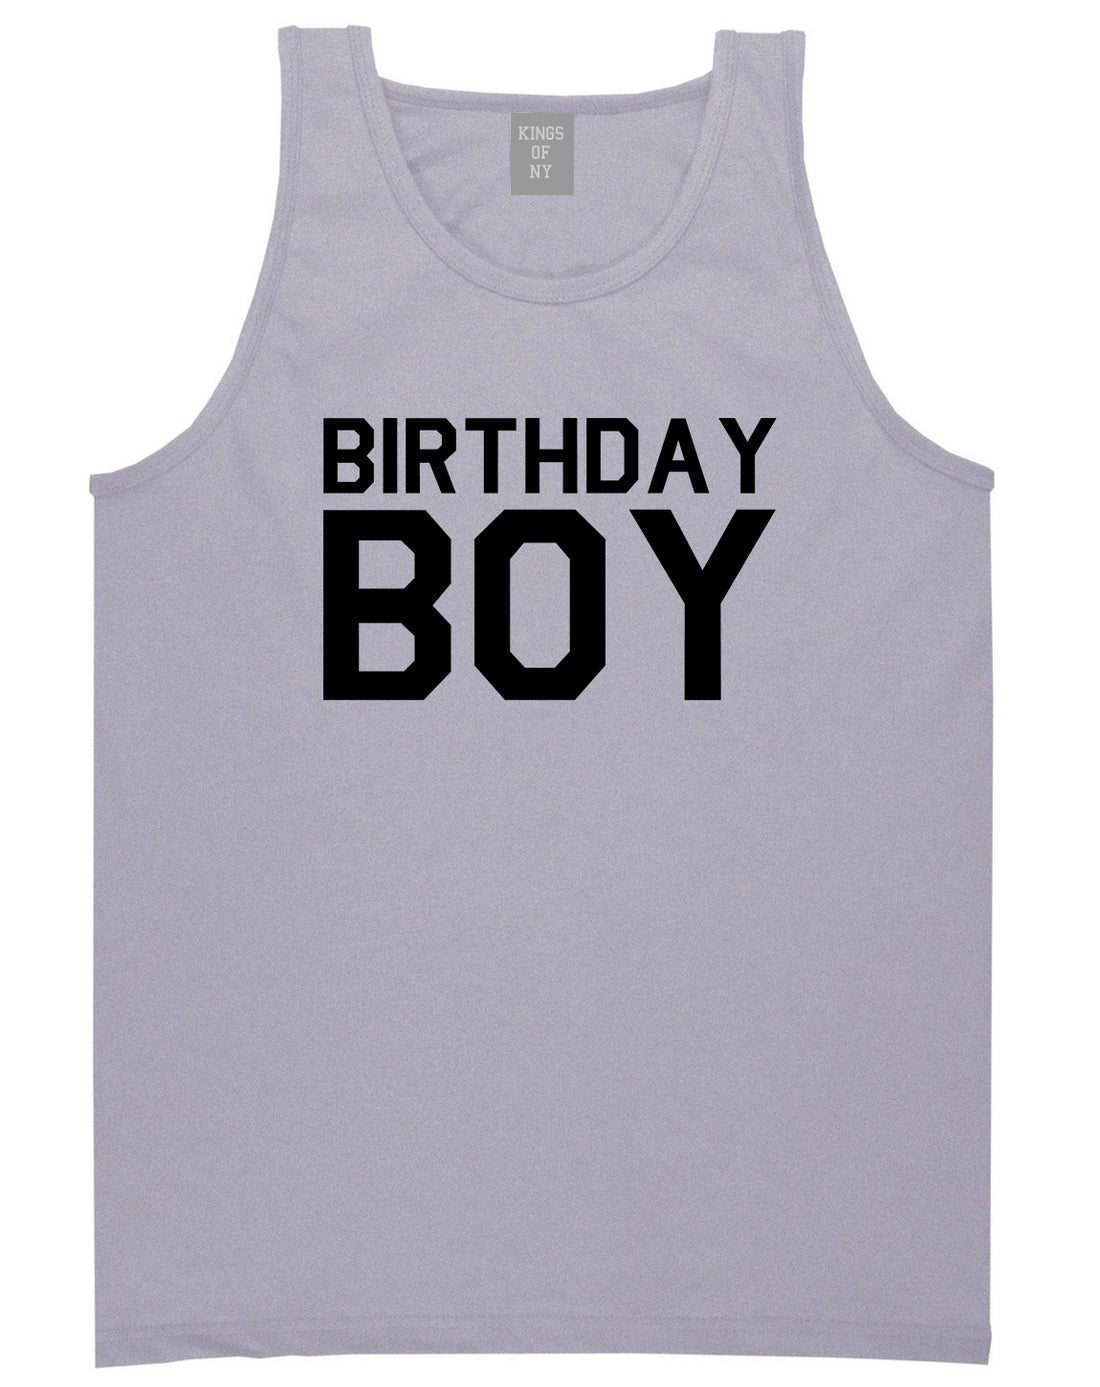 Birthday Boy Grey Tank Top Shirt by Kings Of NY